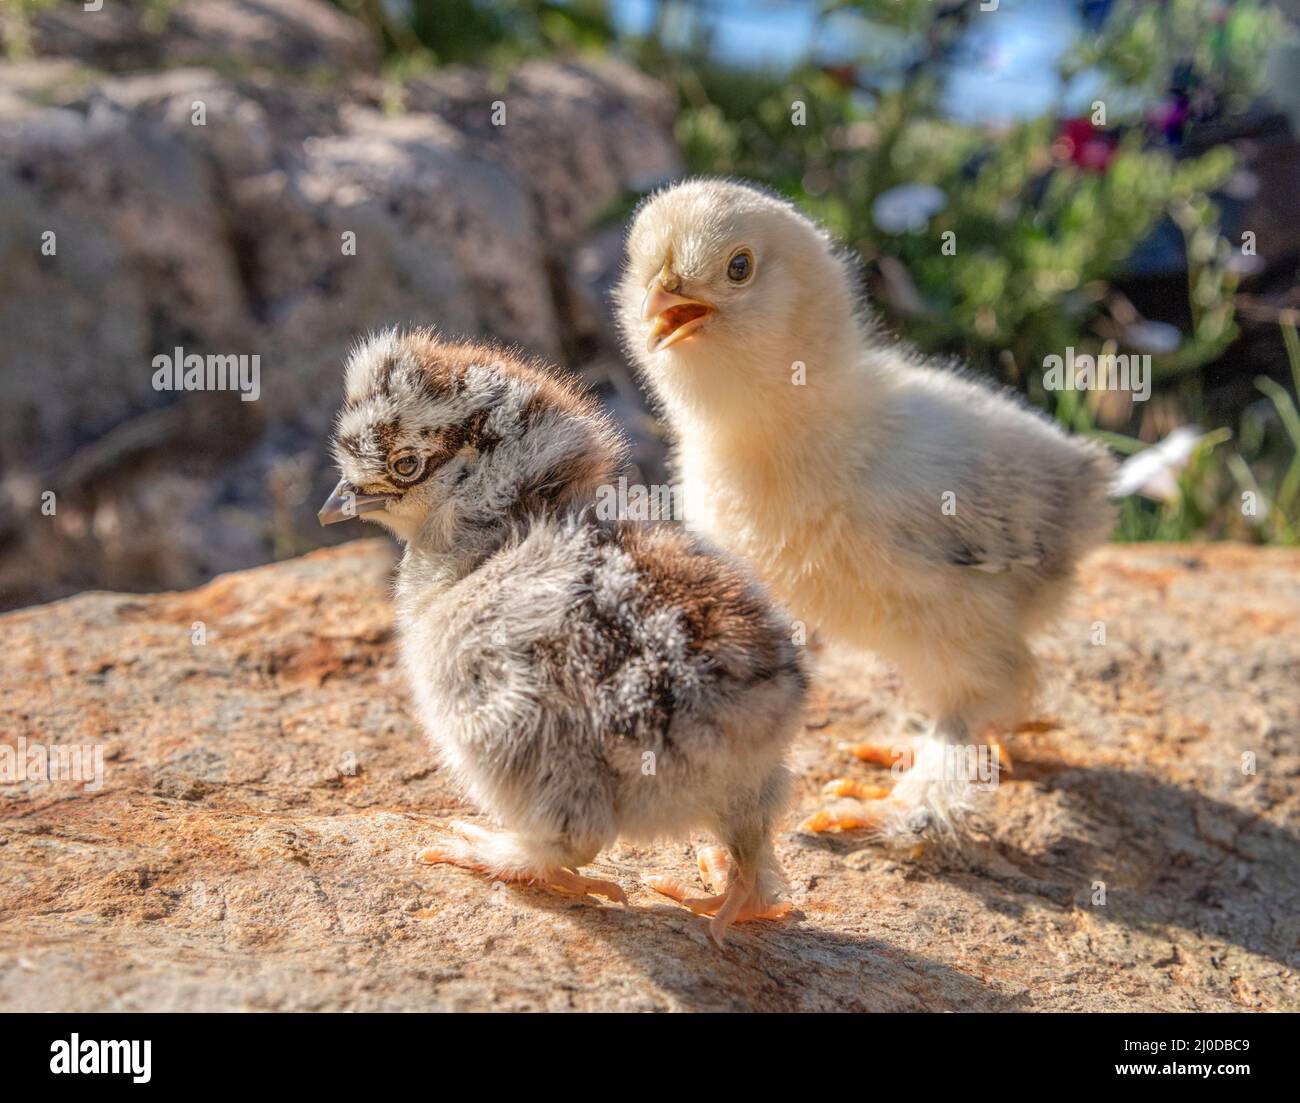 Free range baby chicks standing on boulder in yard Stock Photo